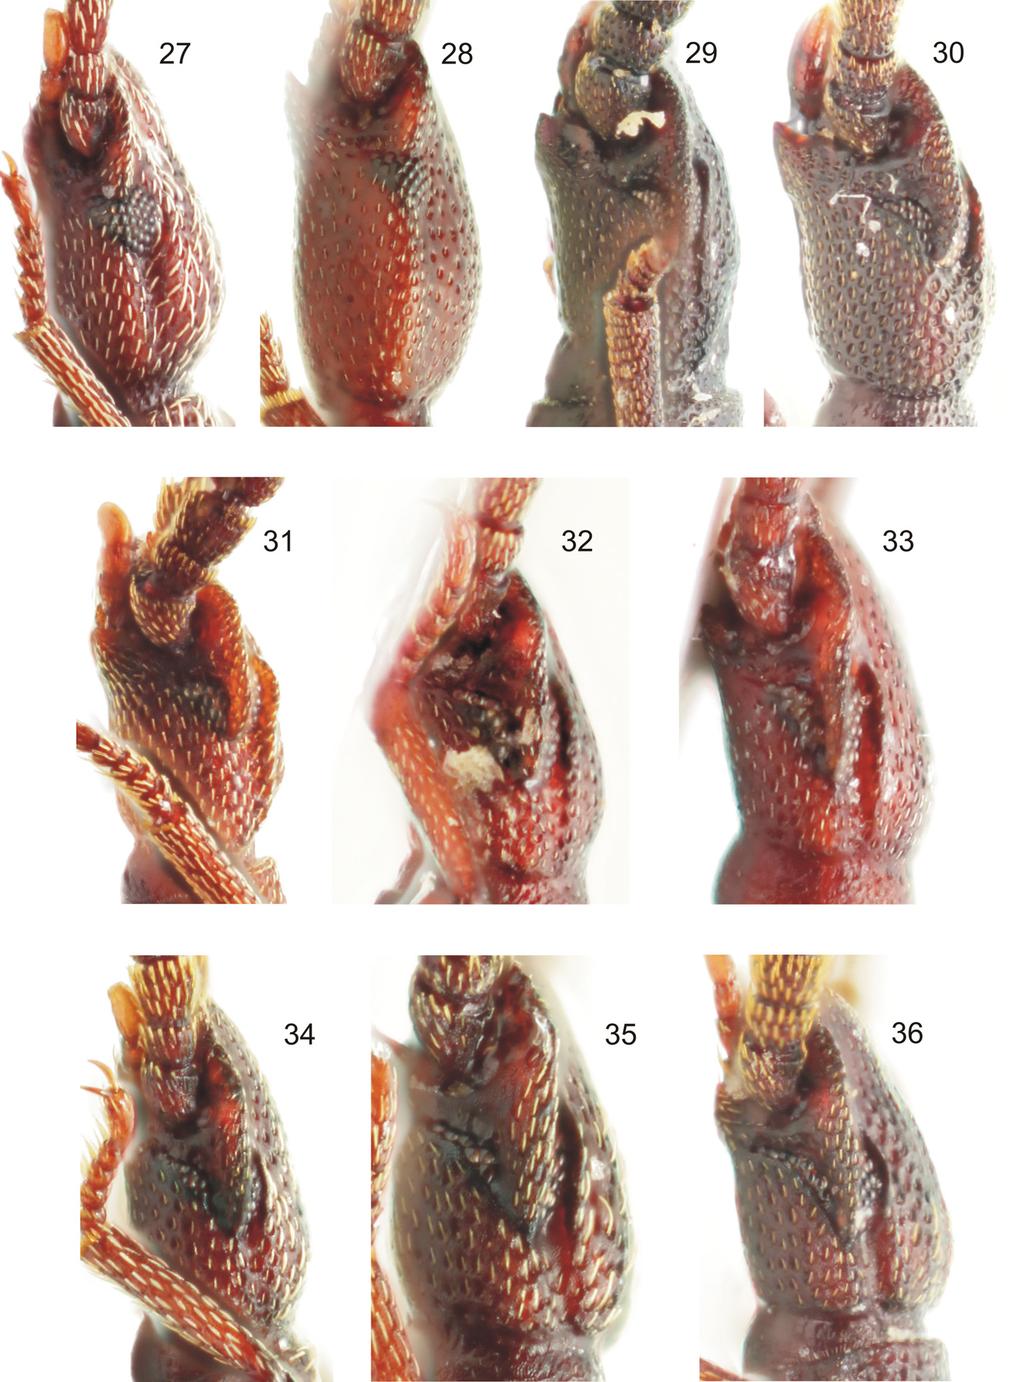 Acta Entomologica Musei Nationalis Pragae, 55(1), 2015 233 Figs 27 36. Lateral view of head with eyes. 27 Indostola pulchella Medvedev, 1991. 28 I. kaengkrachanensis sp. nov.